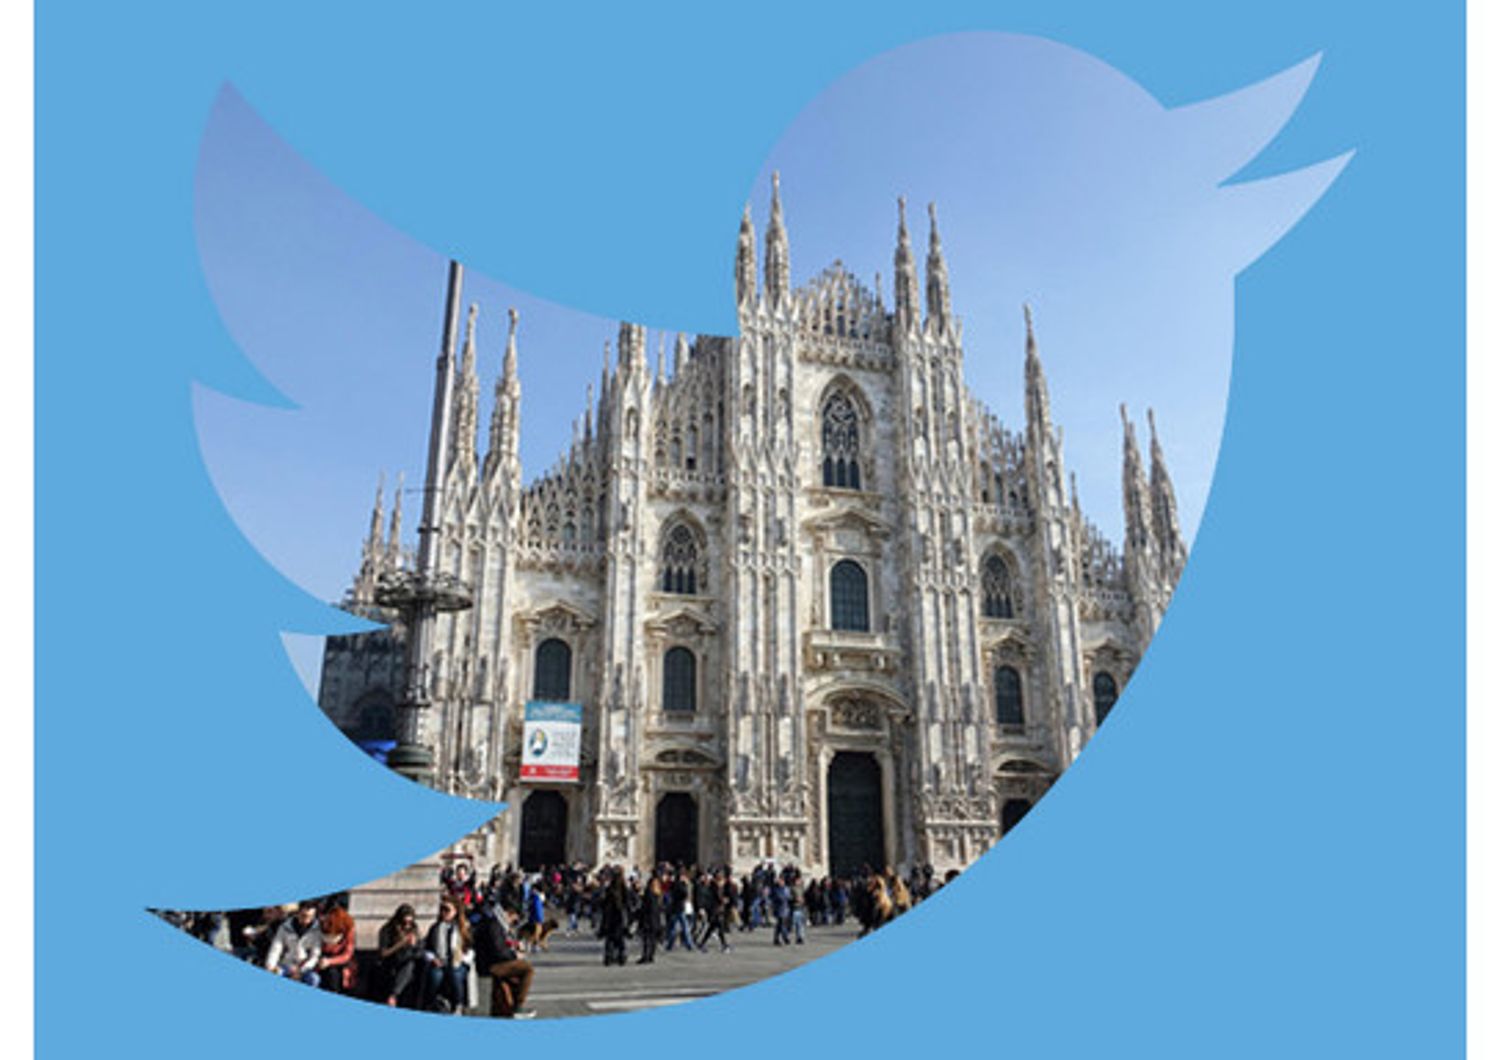 Comunali: su Agi.it programmi candidati in 5 tweet, oggi Milano